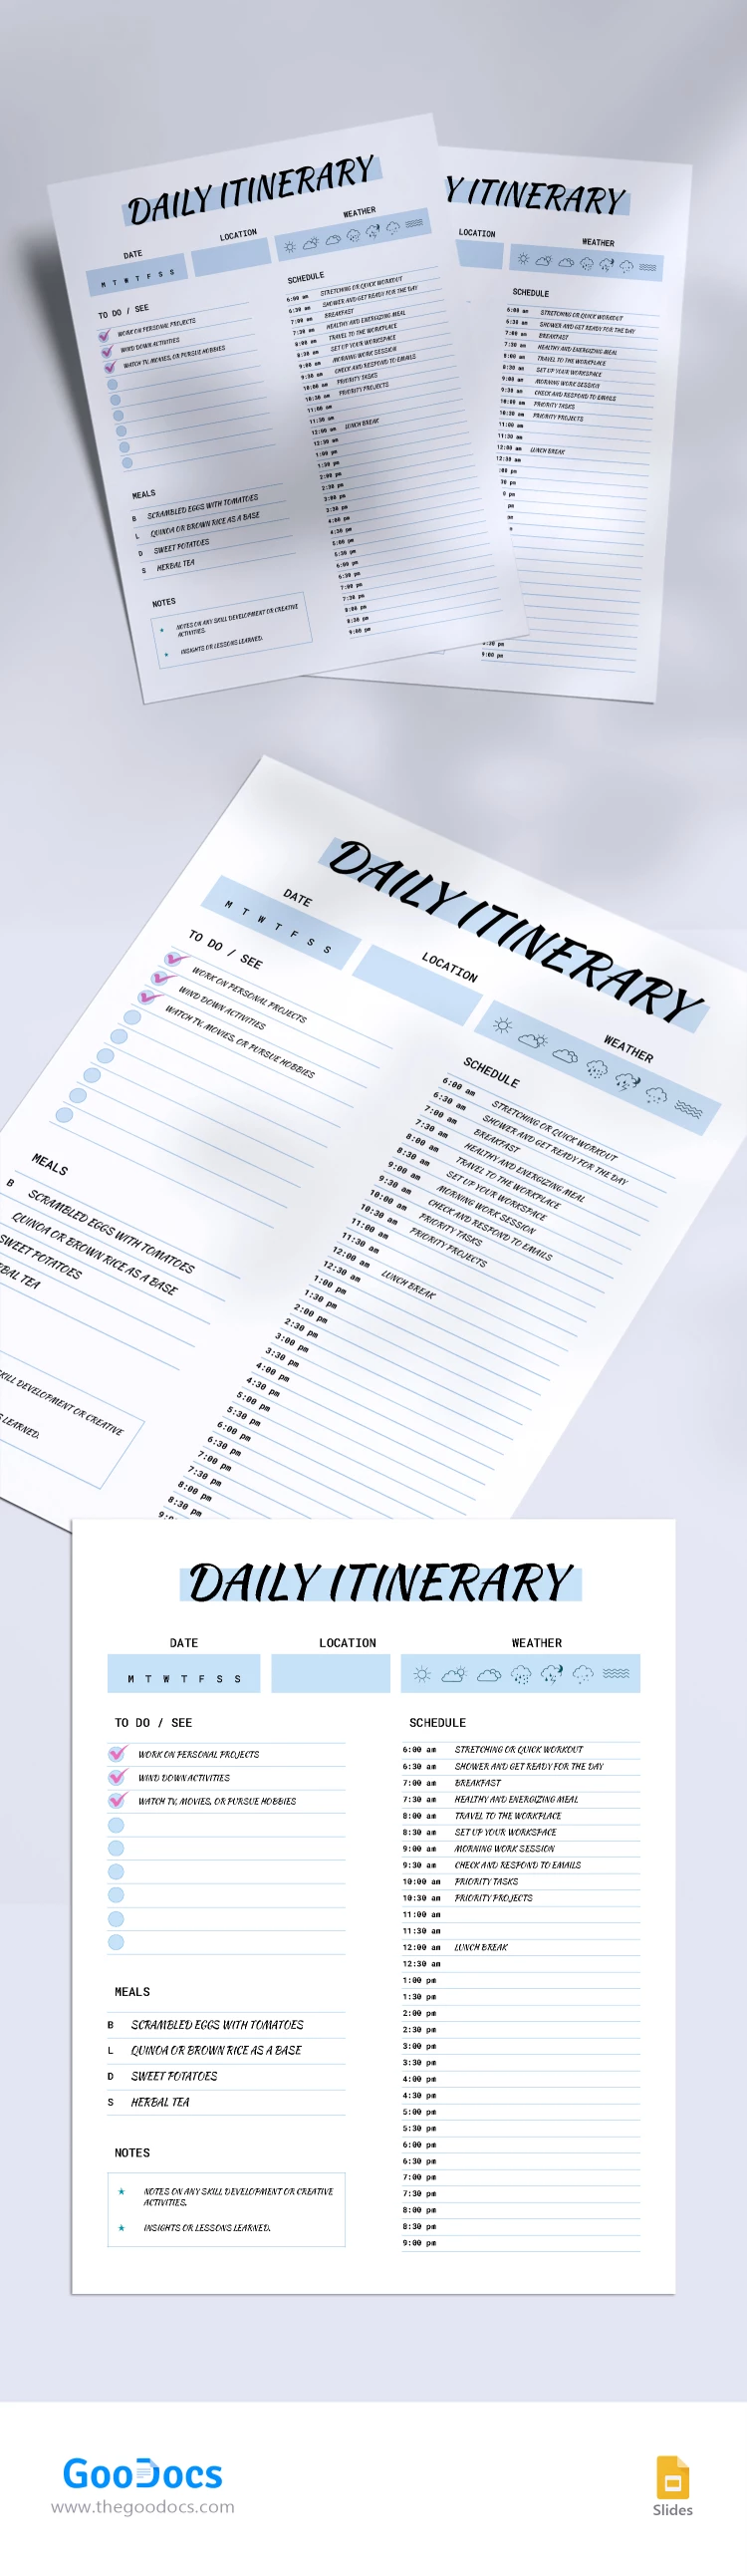 Itinerario diario simple - free Google Docs Template - 10067427